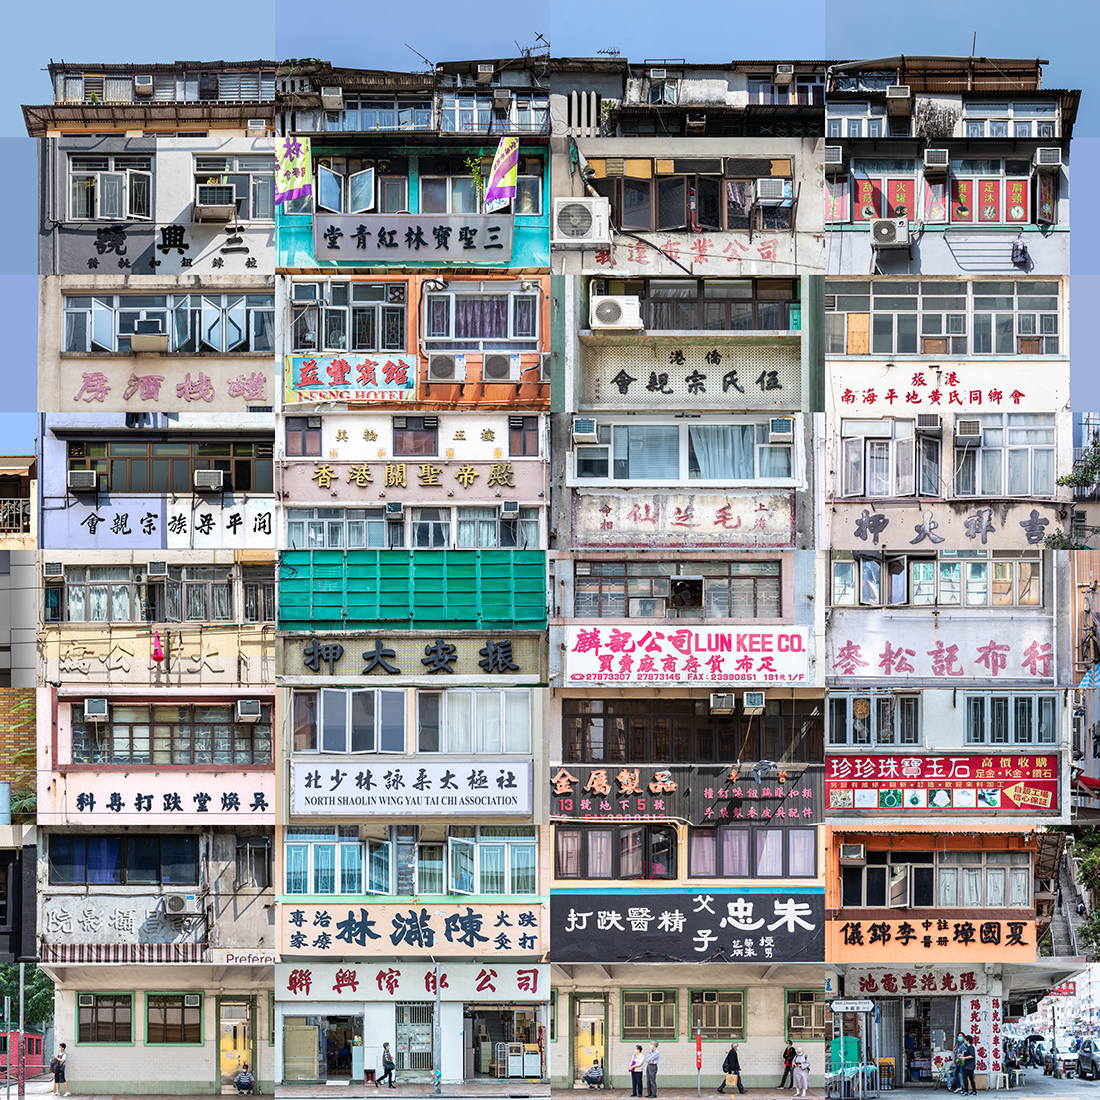 Tong Lau - the Colorful Building Blocks